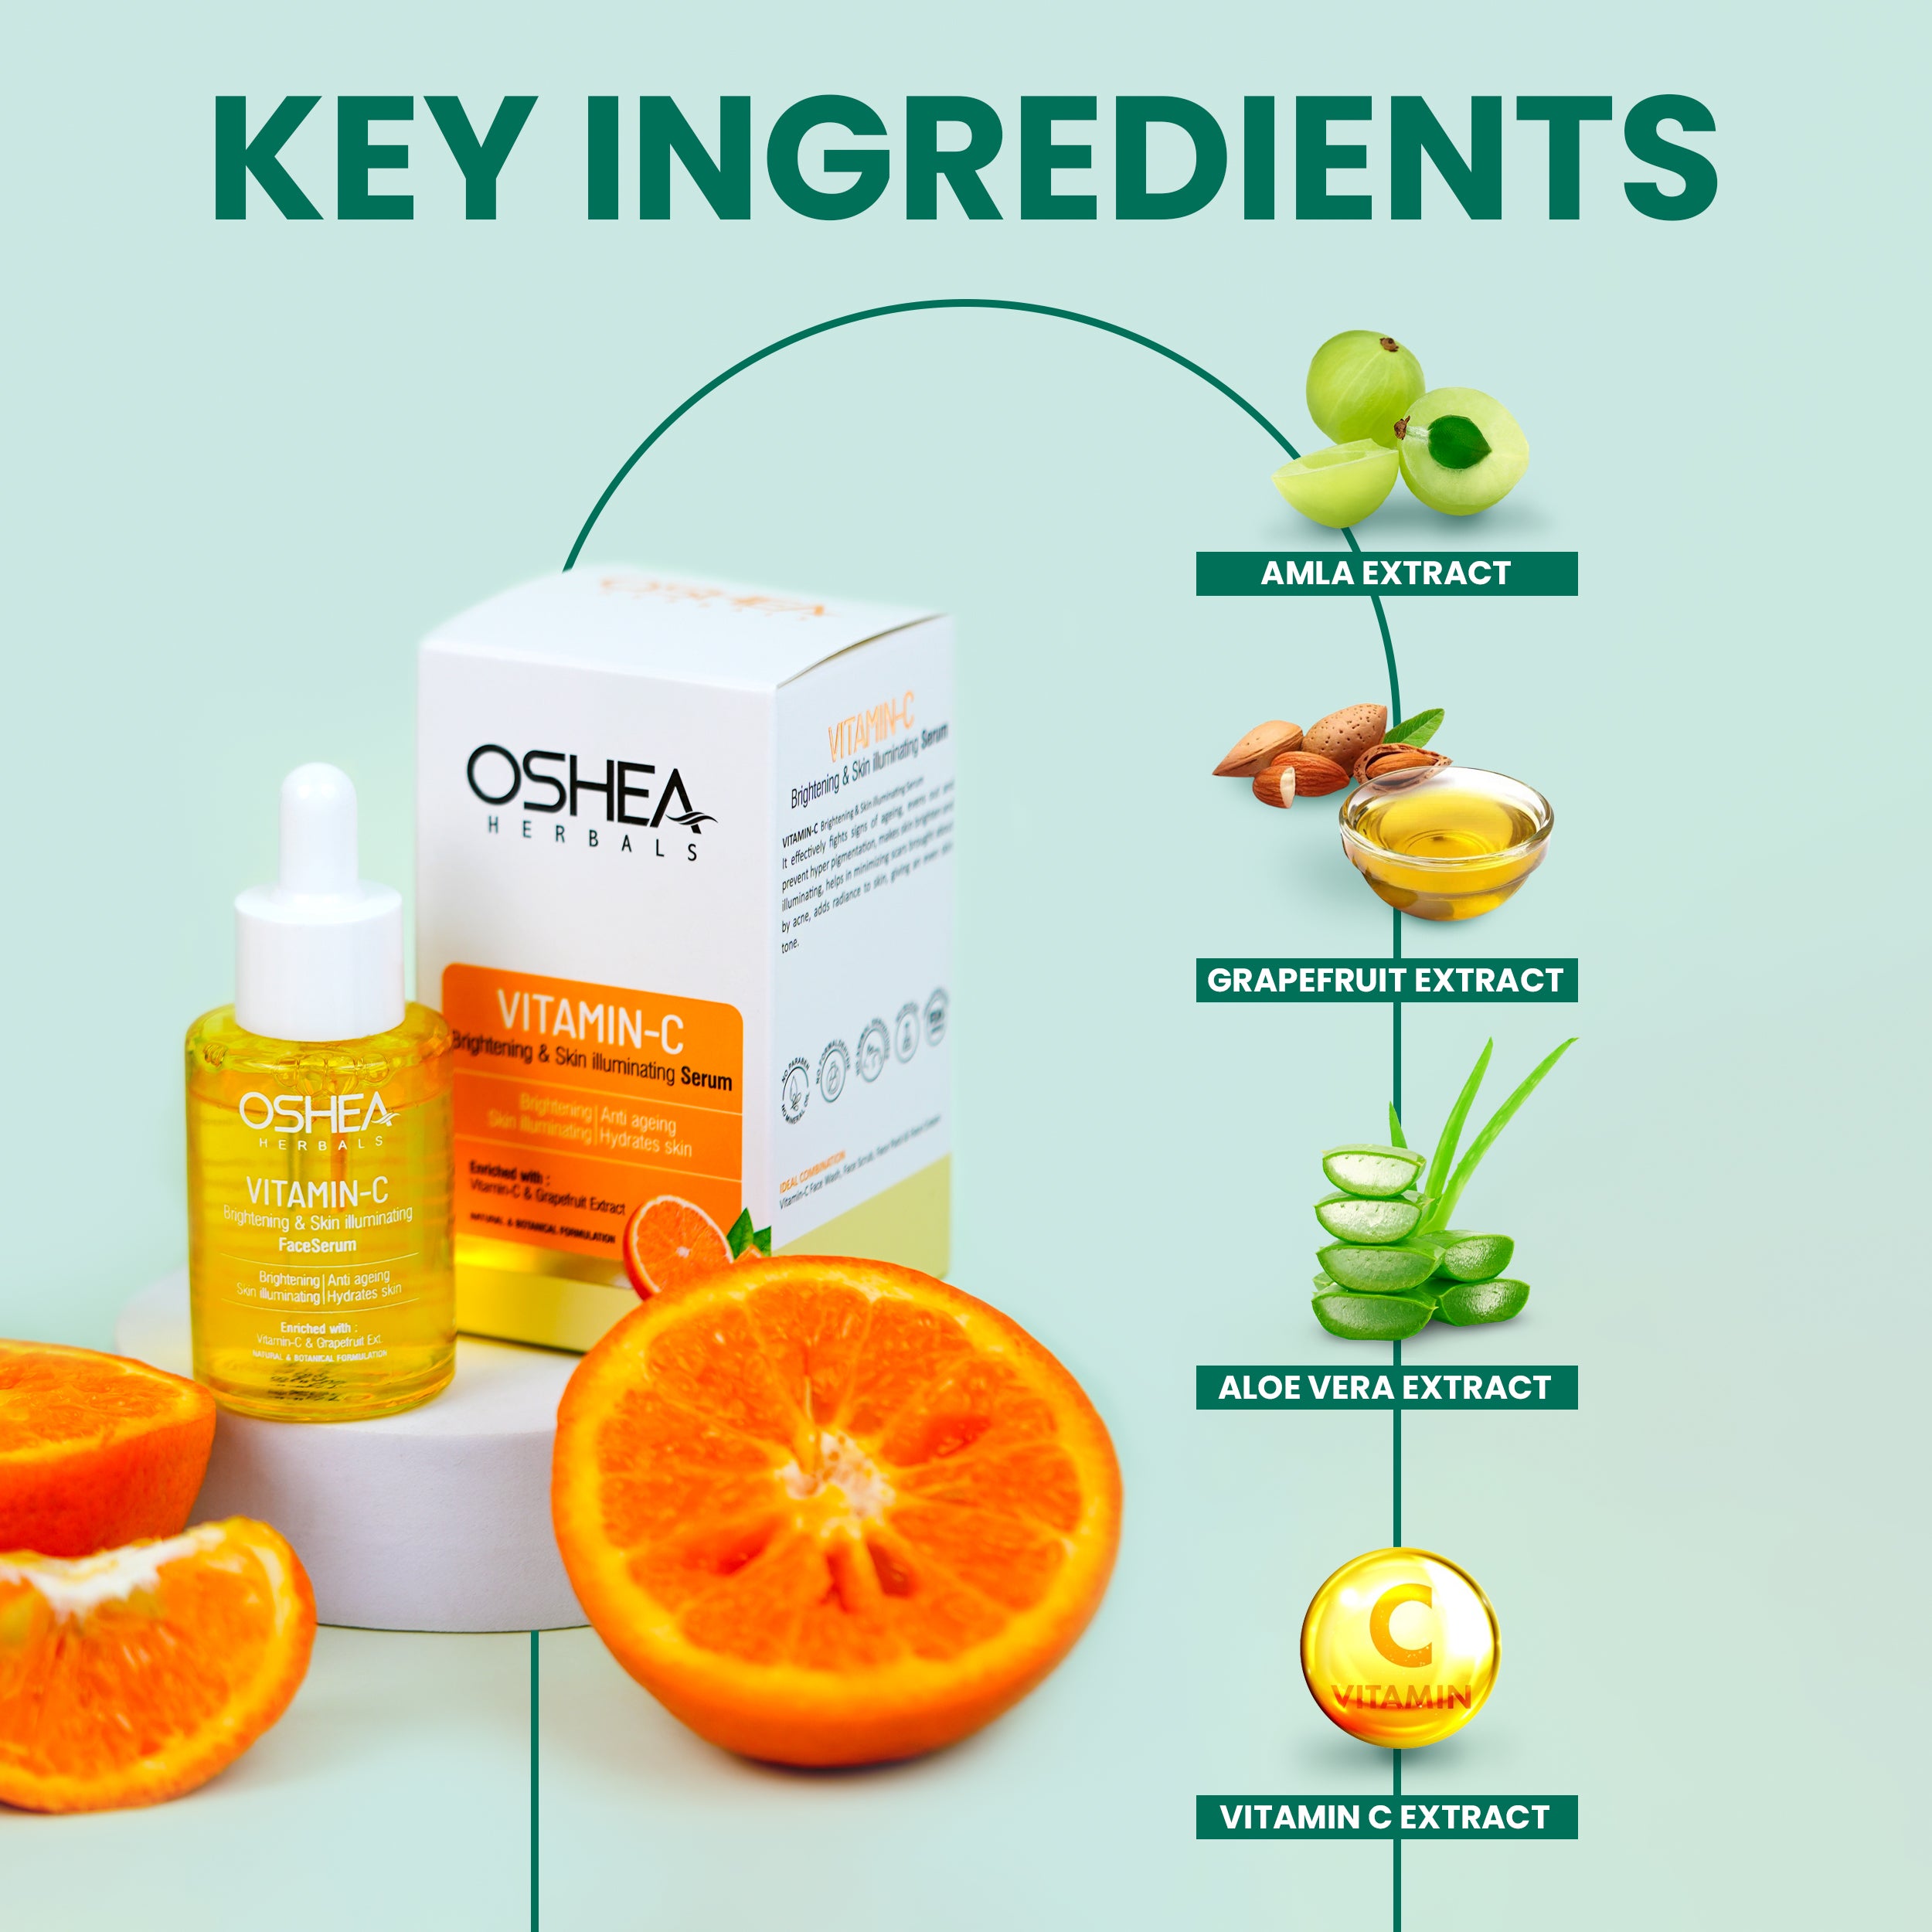 Key ingredients Vitamin C Brightening_Skin lluminating Serum Oshea HERBALS